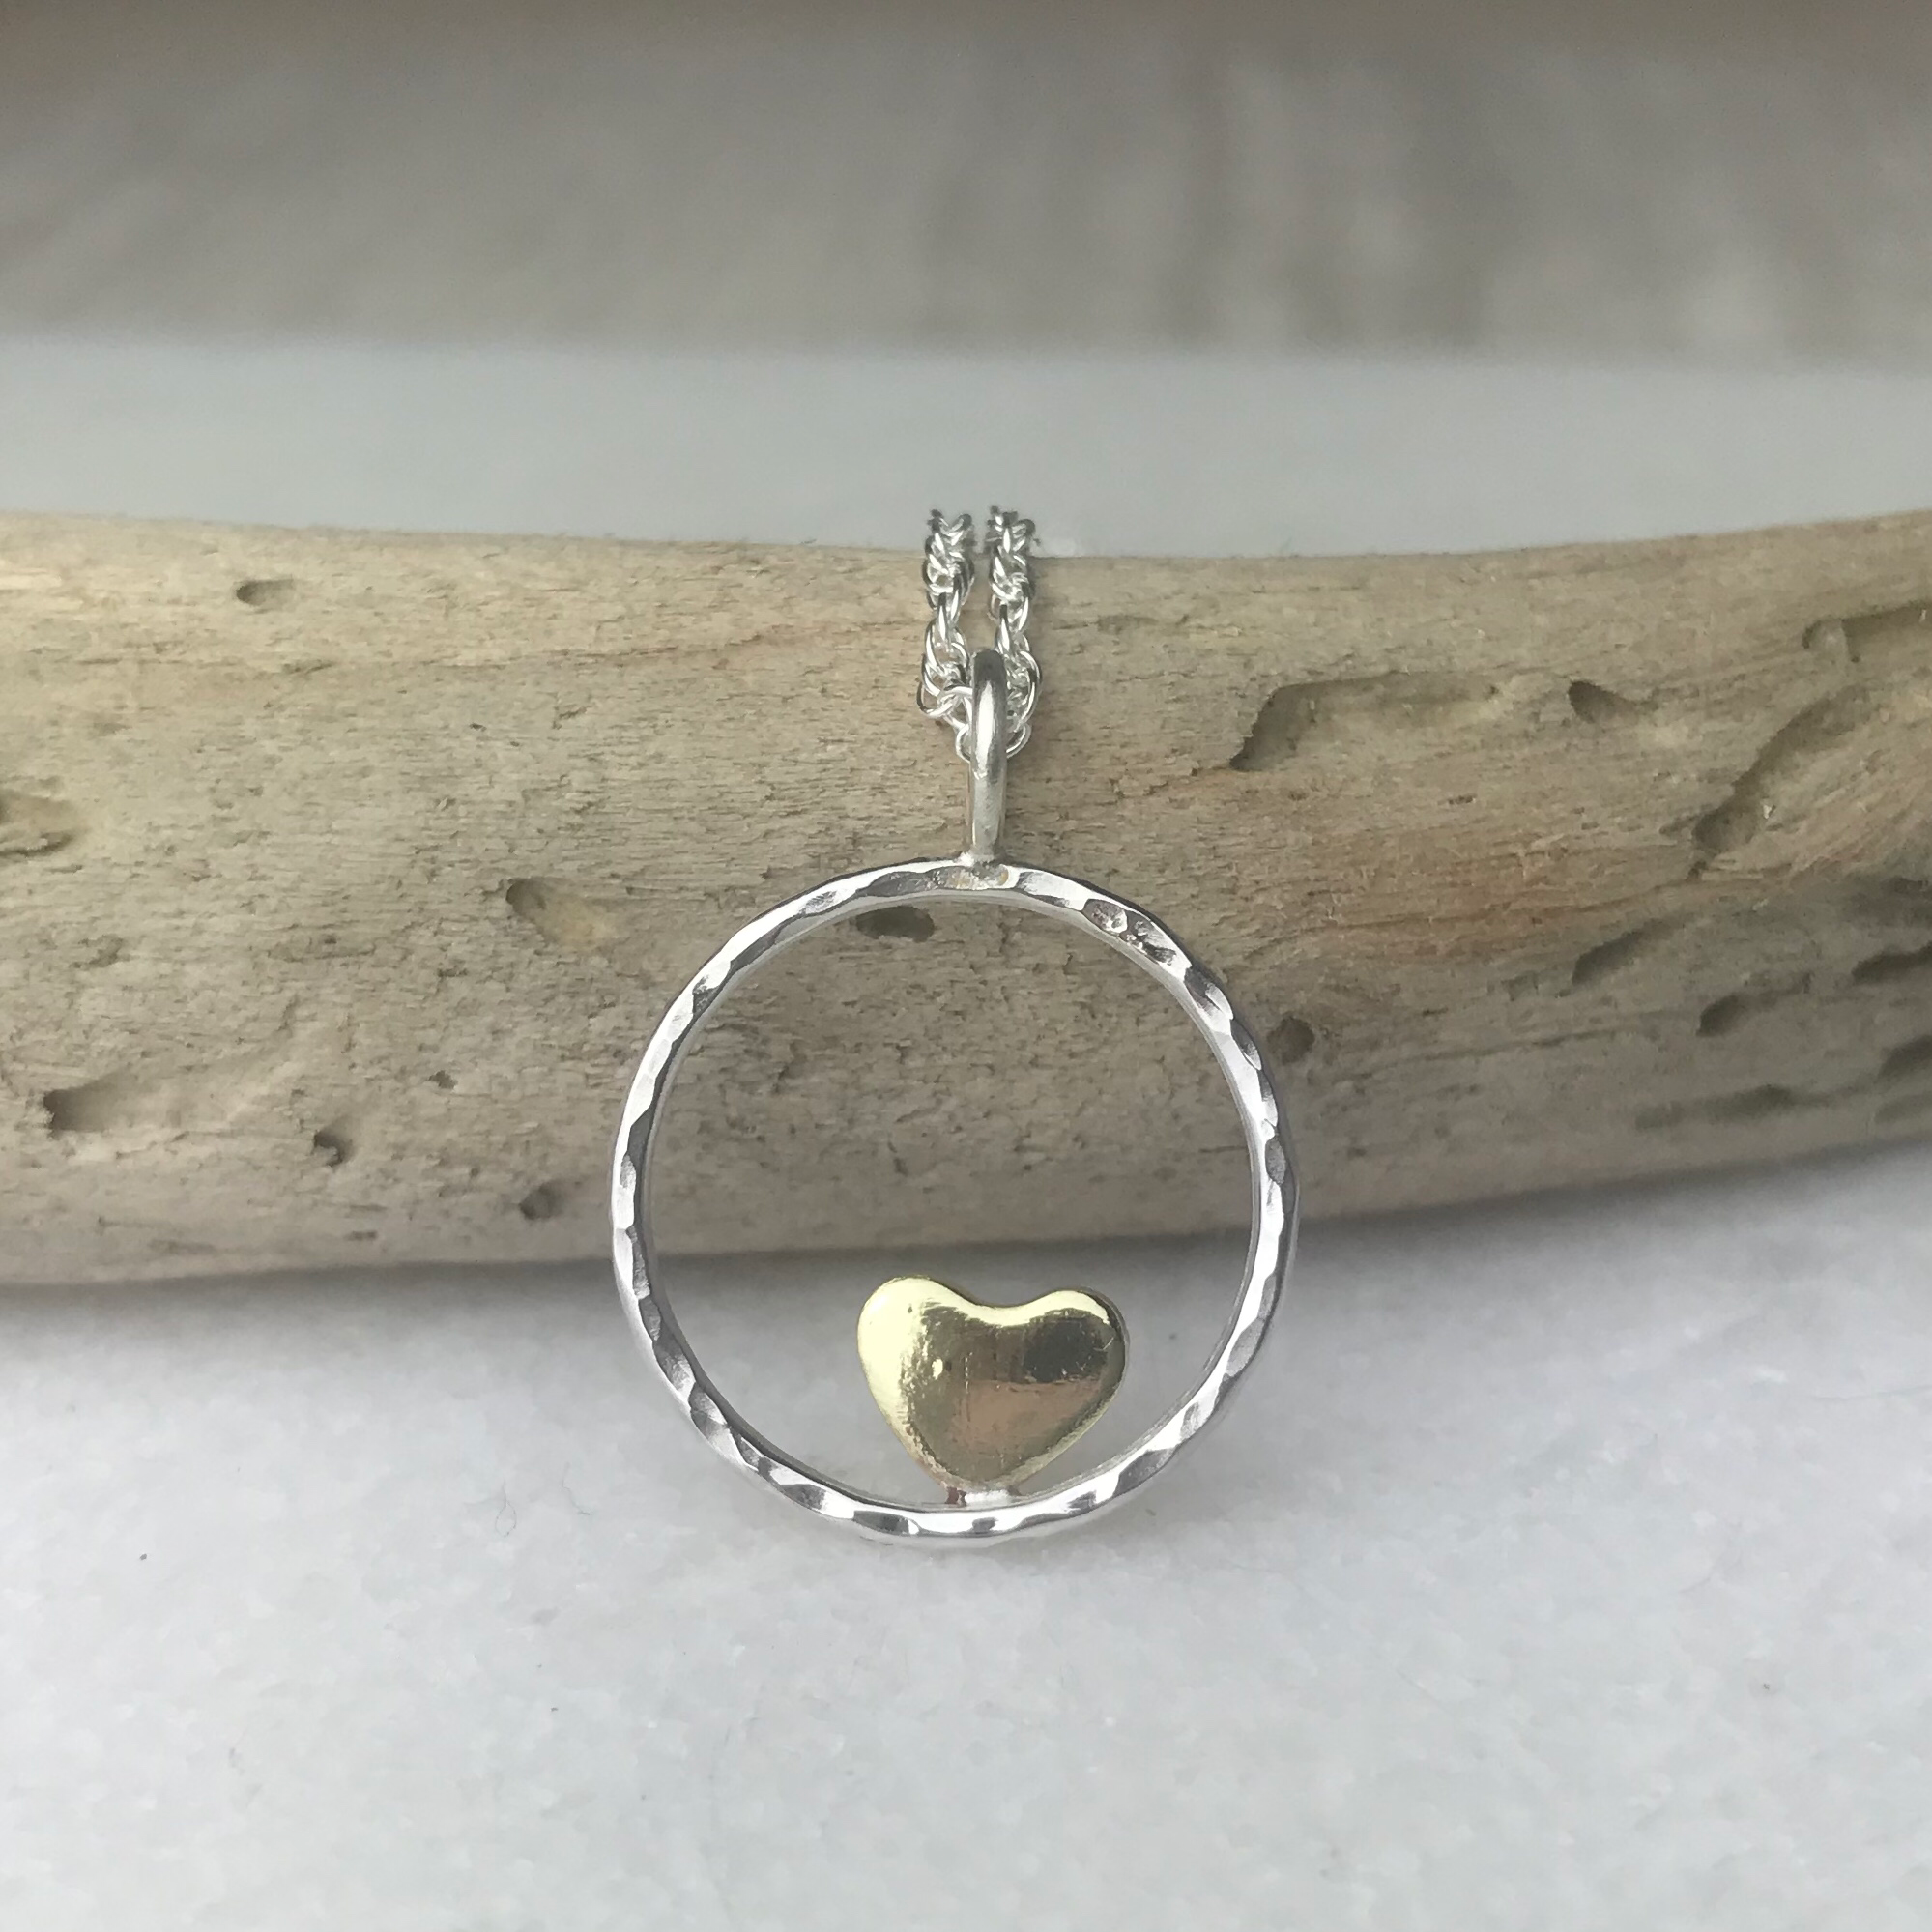 Brass Heart Hoop Necklace - The Nancy Smillie Shop - Art, Jewellery & Designer Gifts Glasgow